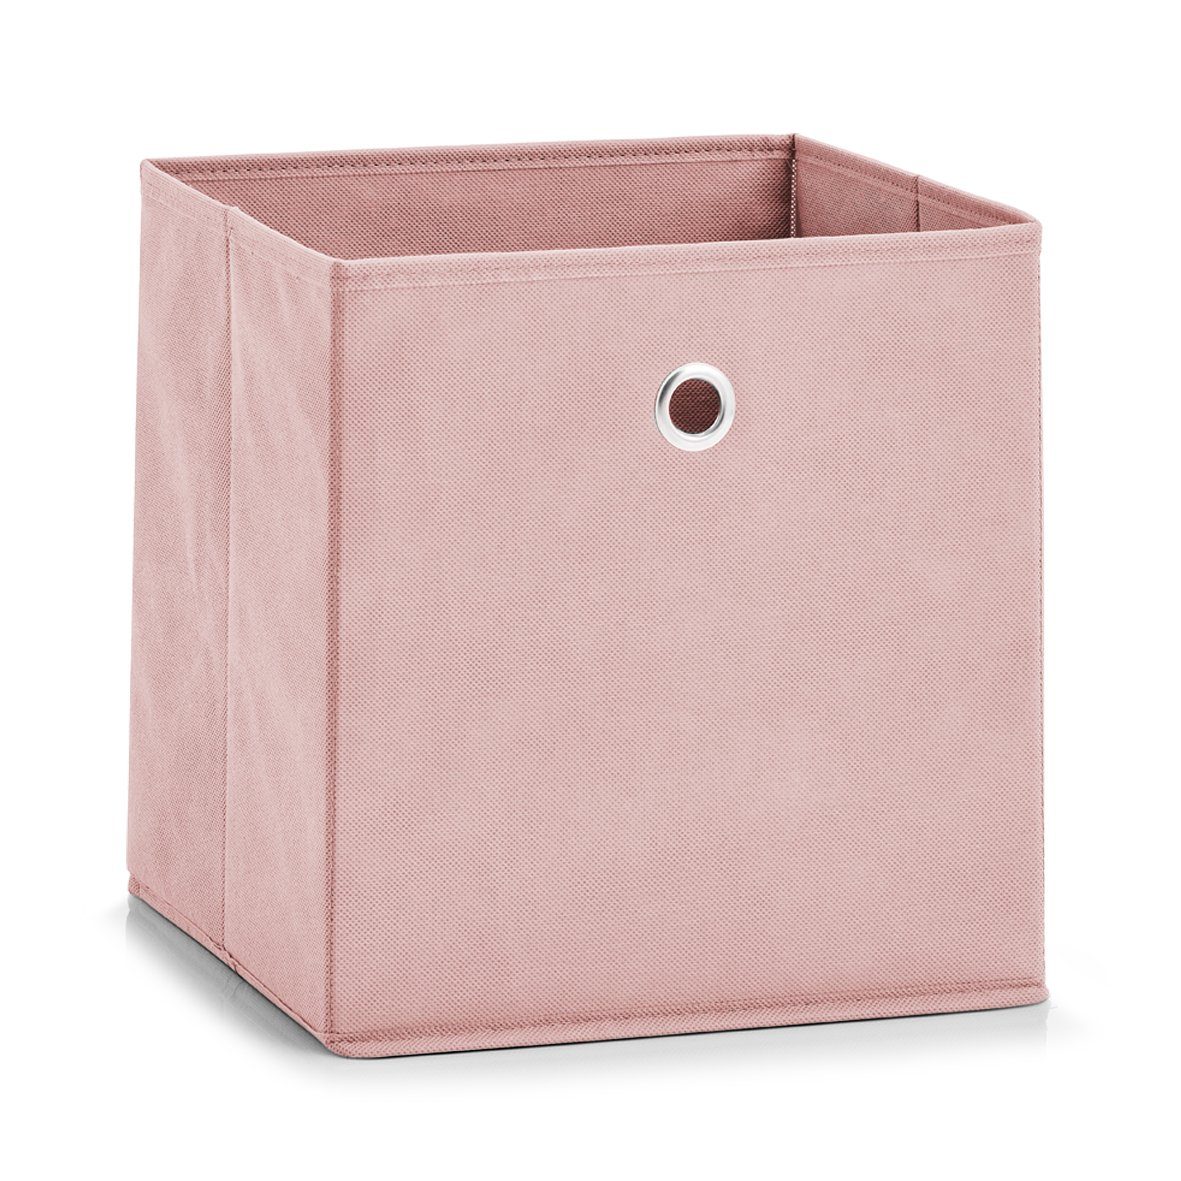 Zeller Present Aufbewahrungskorb Aufbewahrungsbox, Vlies, rosé, 28 x 28 x 28 cm